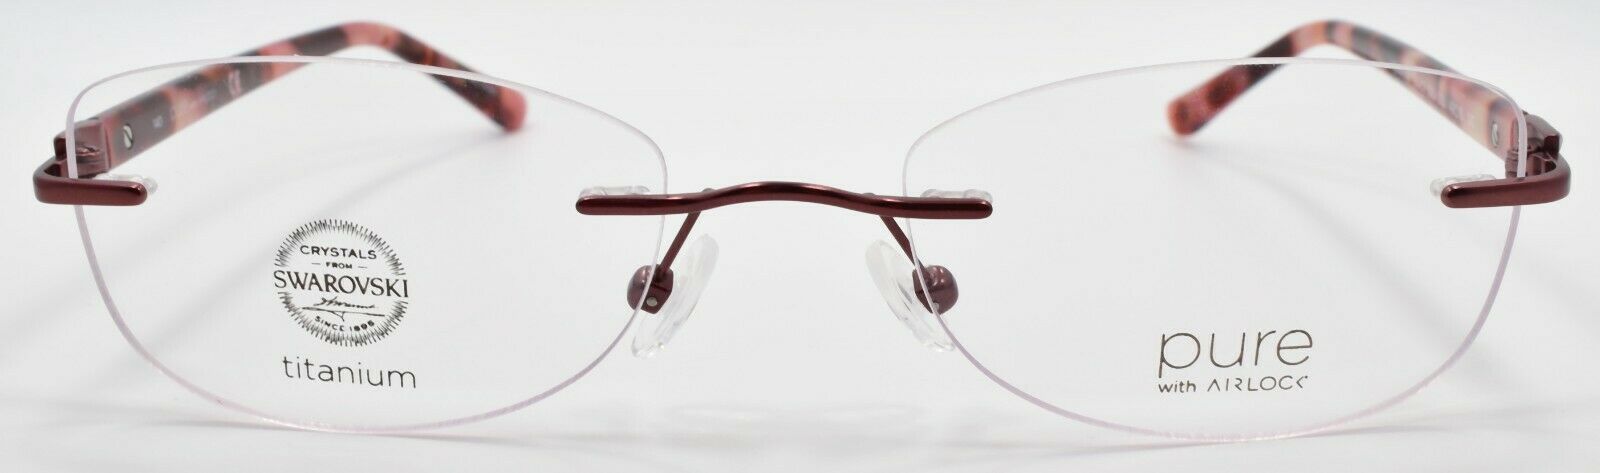 2-Airlock Grace 200 210 Women's Glasses Rimless 49-18-140 Brown Rose Swarovski-886895404396-IKSpecs